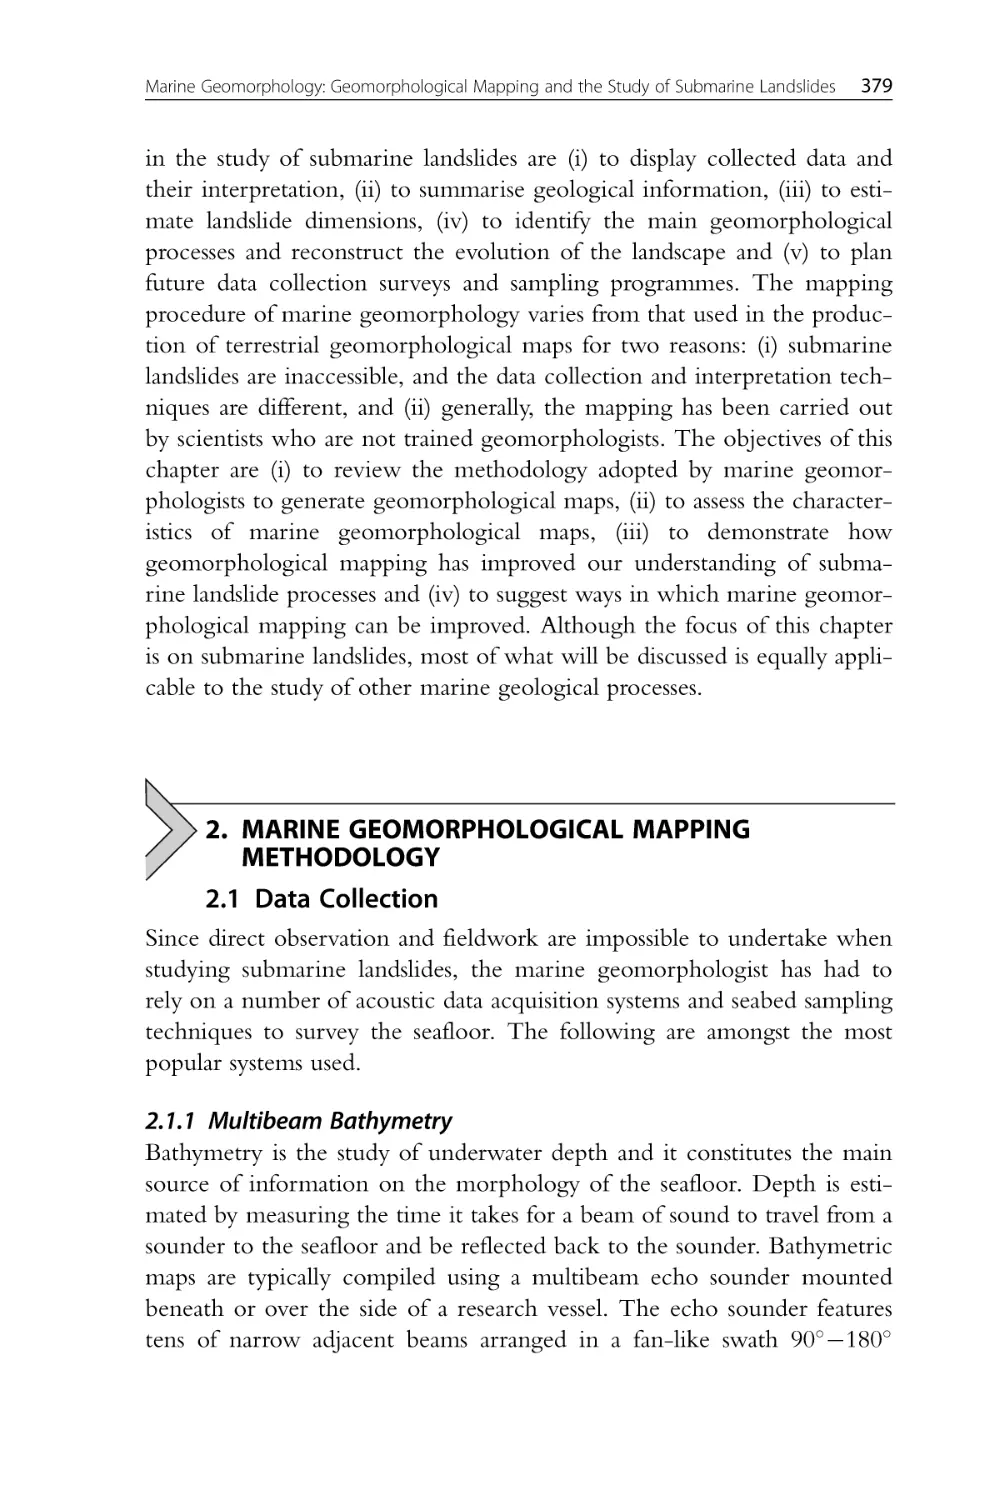 2. Marine Geomorphological Mapping Methodology
2.1 Data Collection
2.1.1 Multibeam Bathymetry